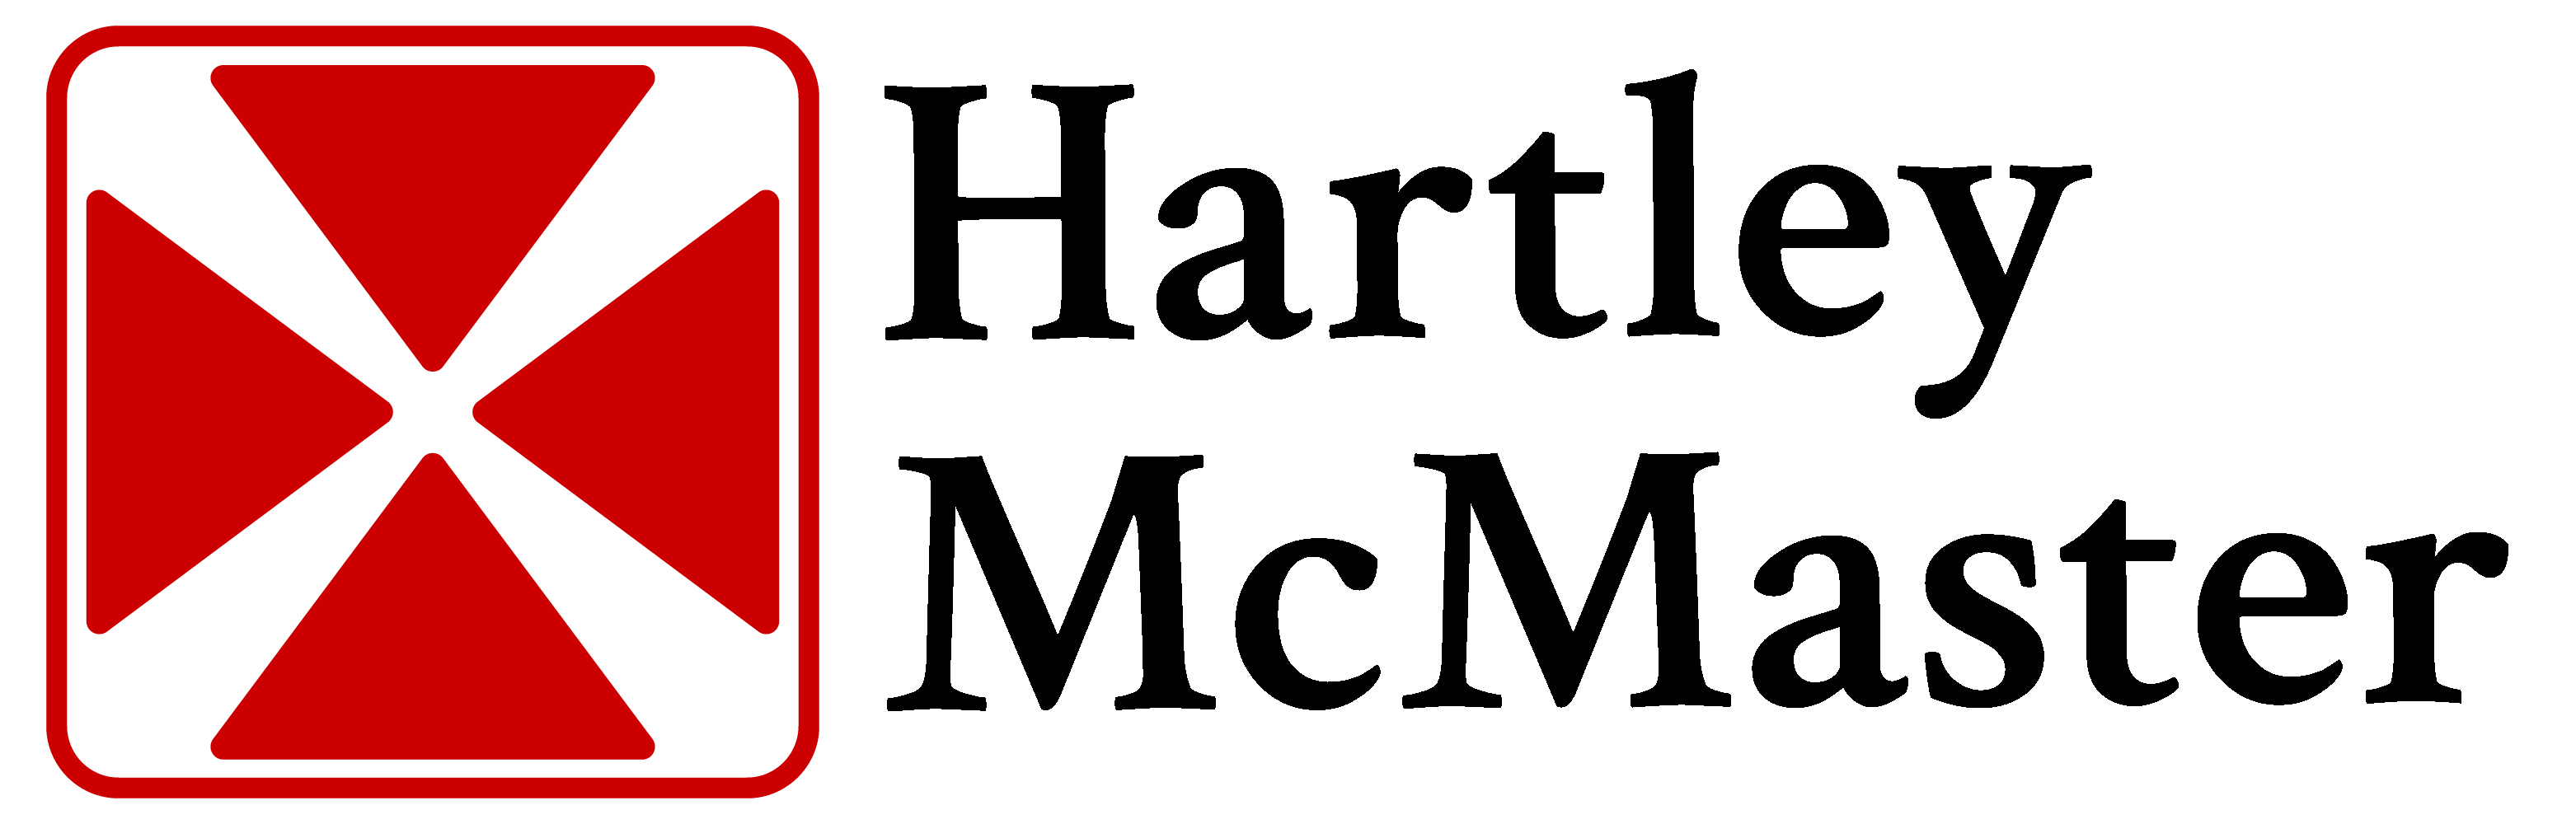 HMCM logo two-colour STANDARD